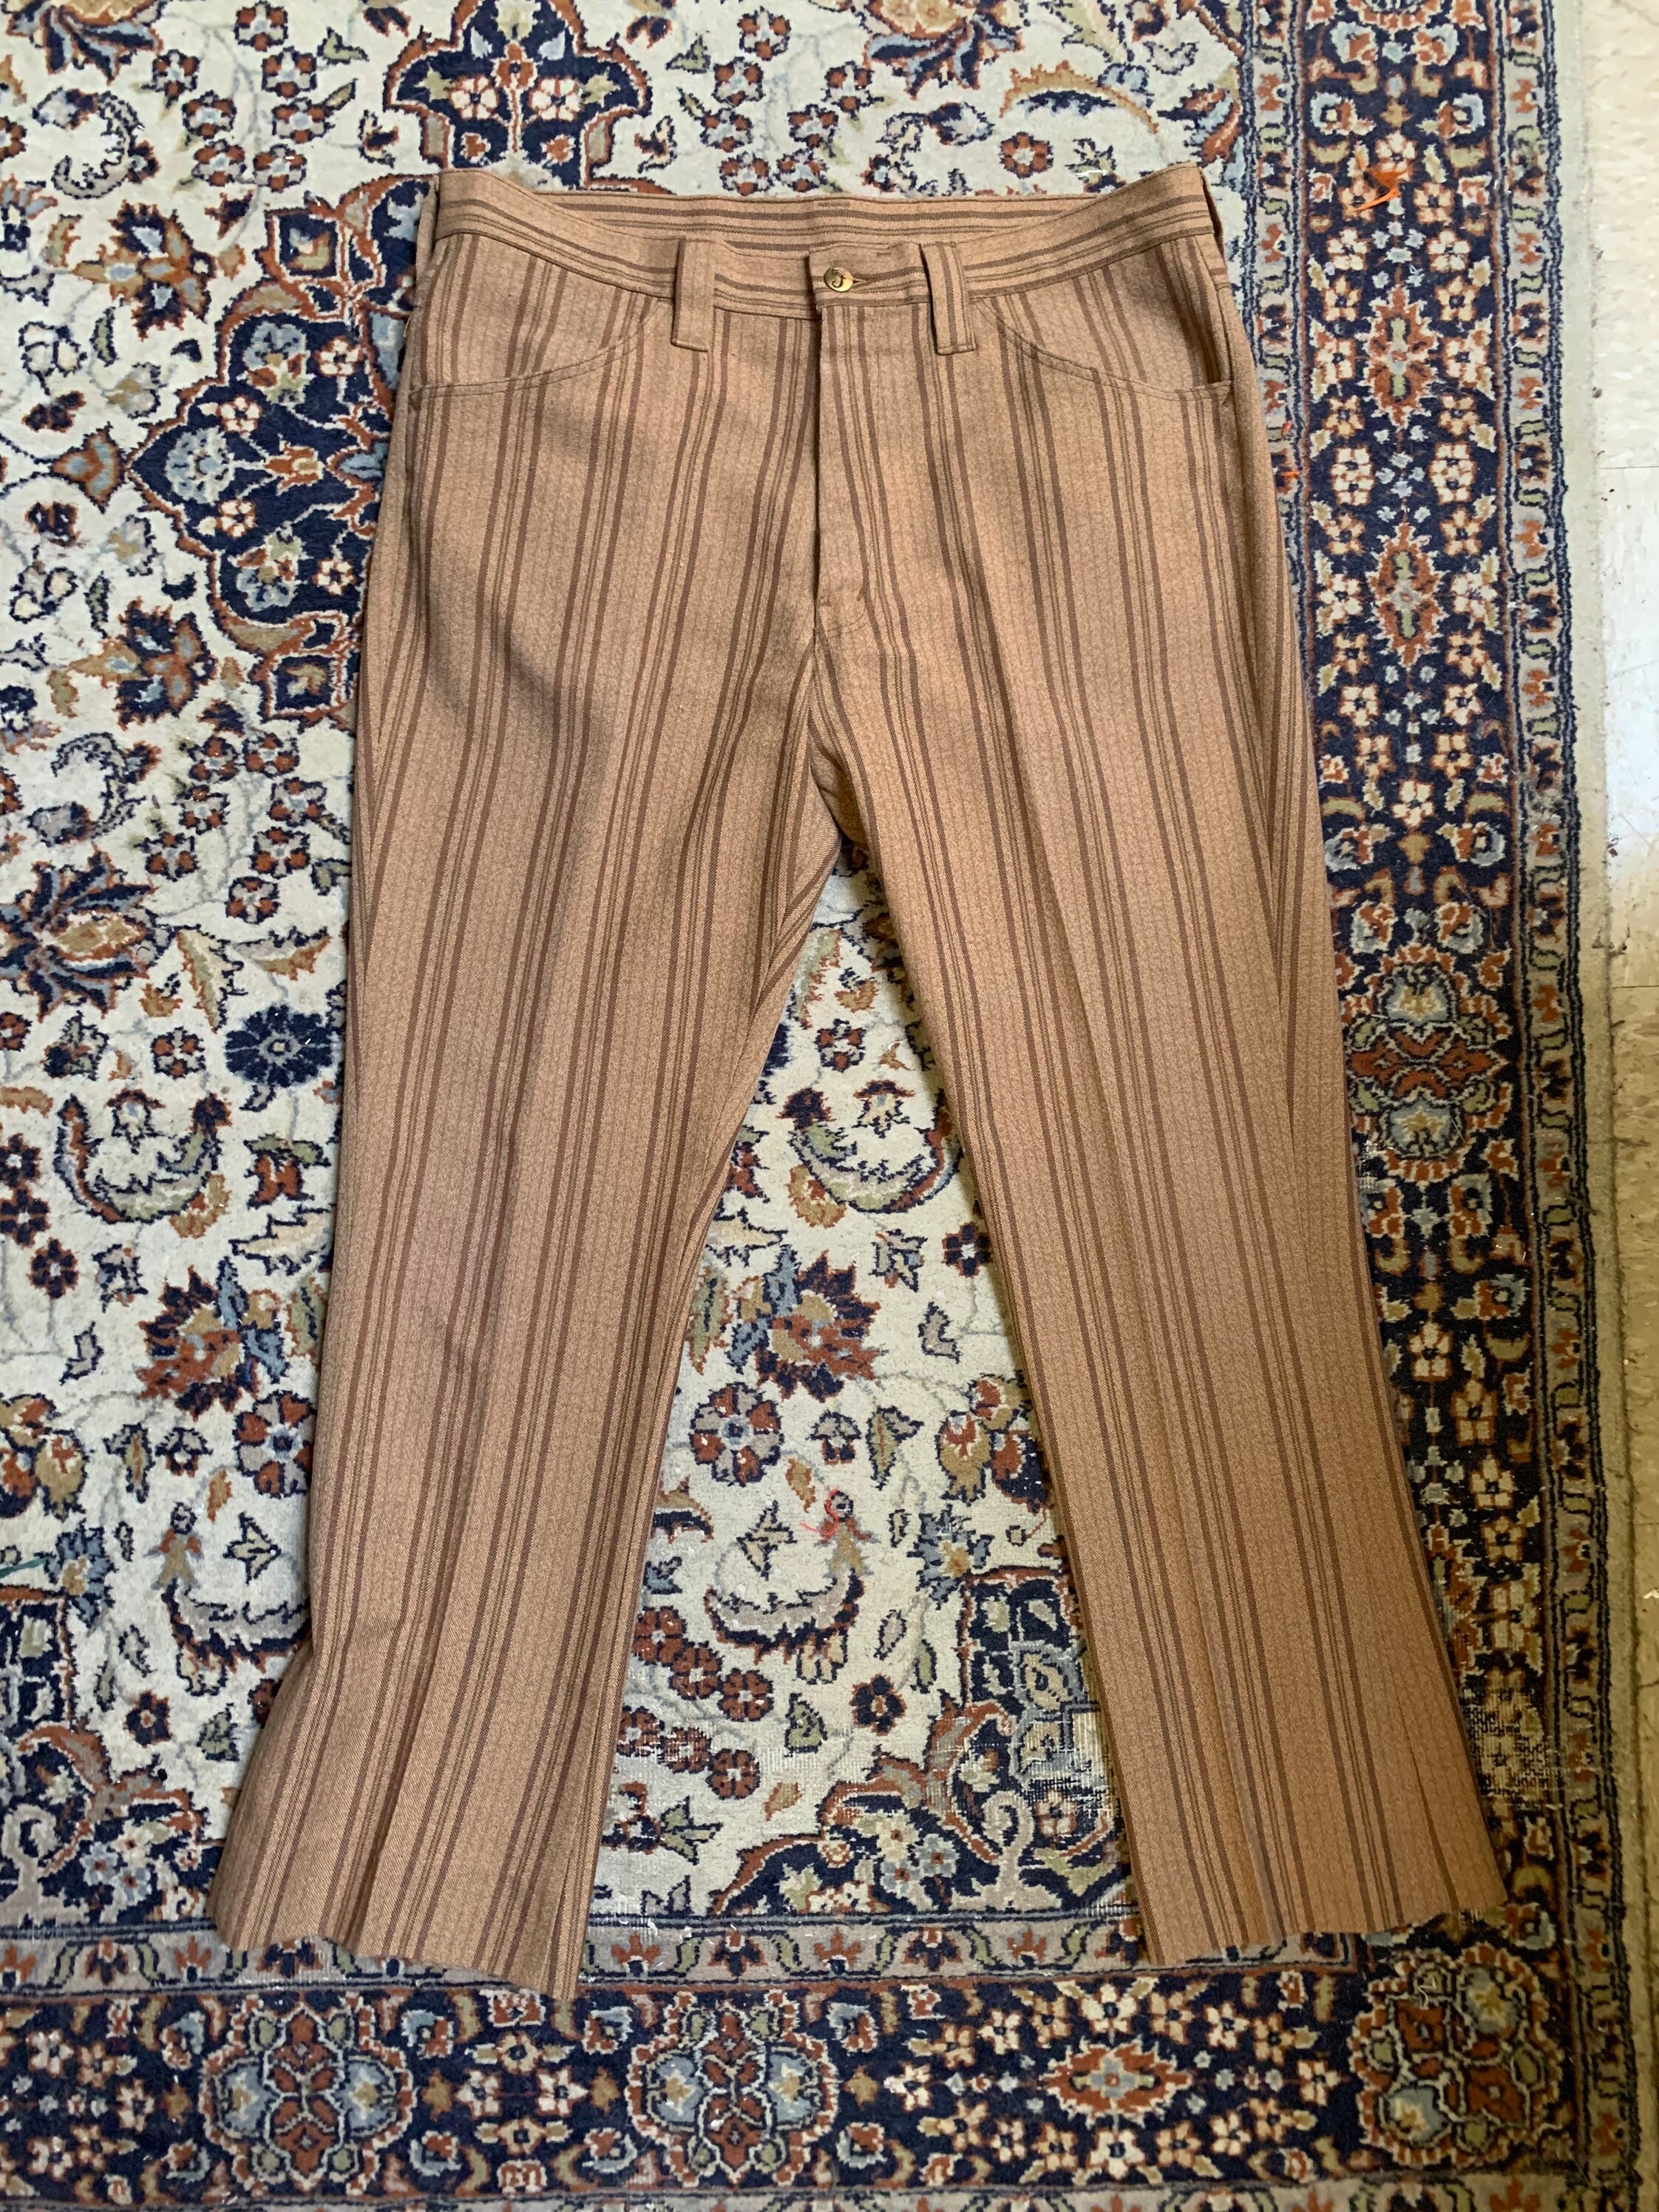 Cute 1980s era Farah striped pants in brown | Etsy